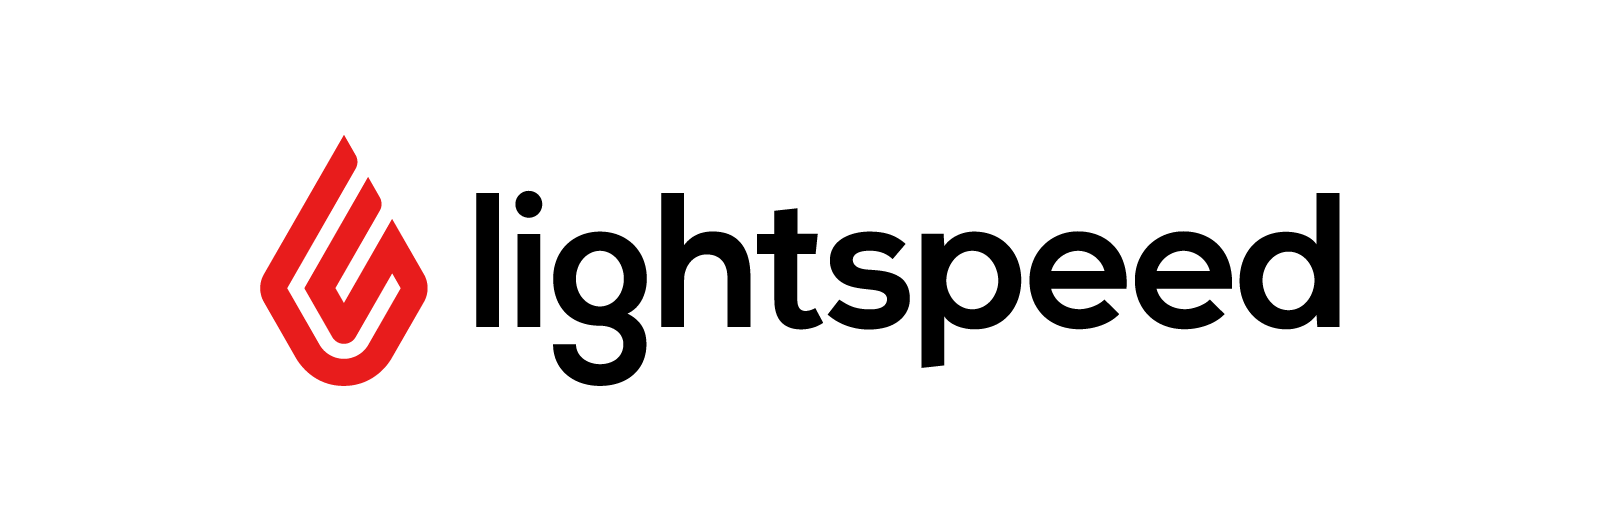 Lightspeed Logo Red Black